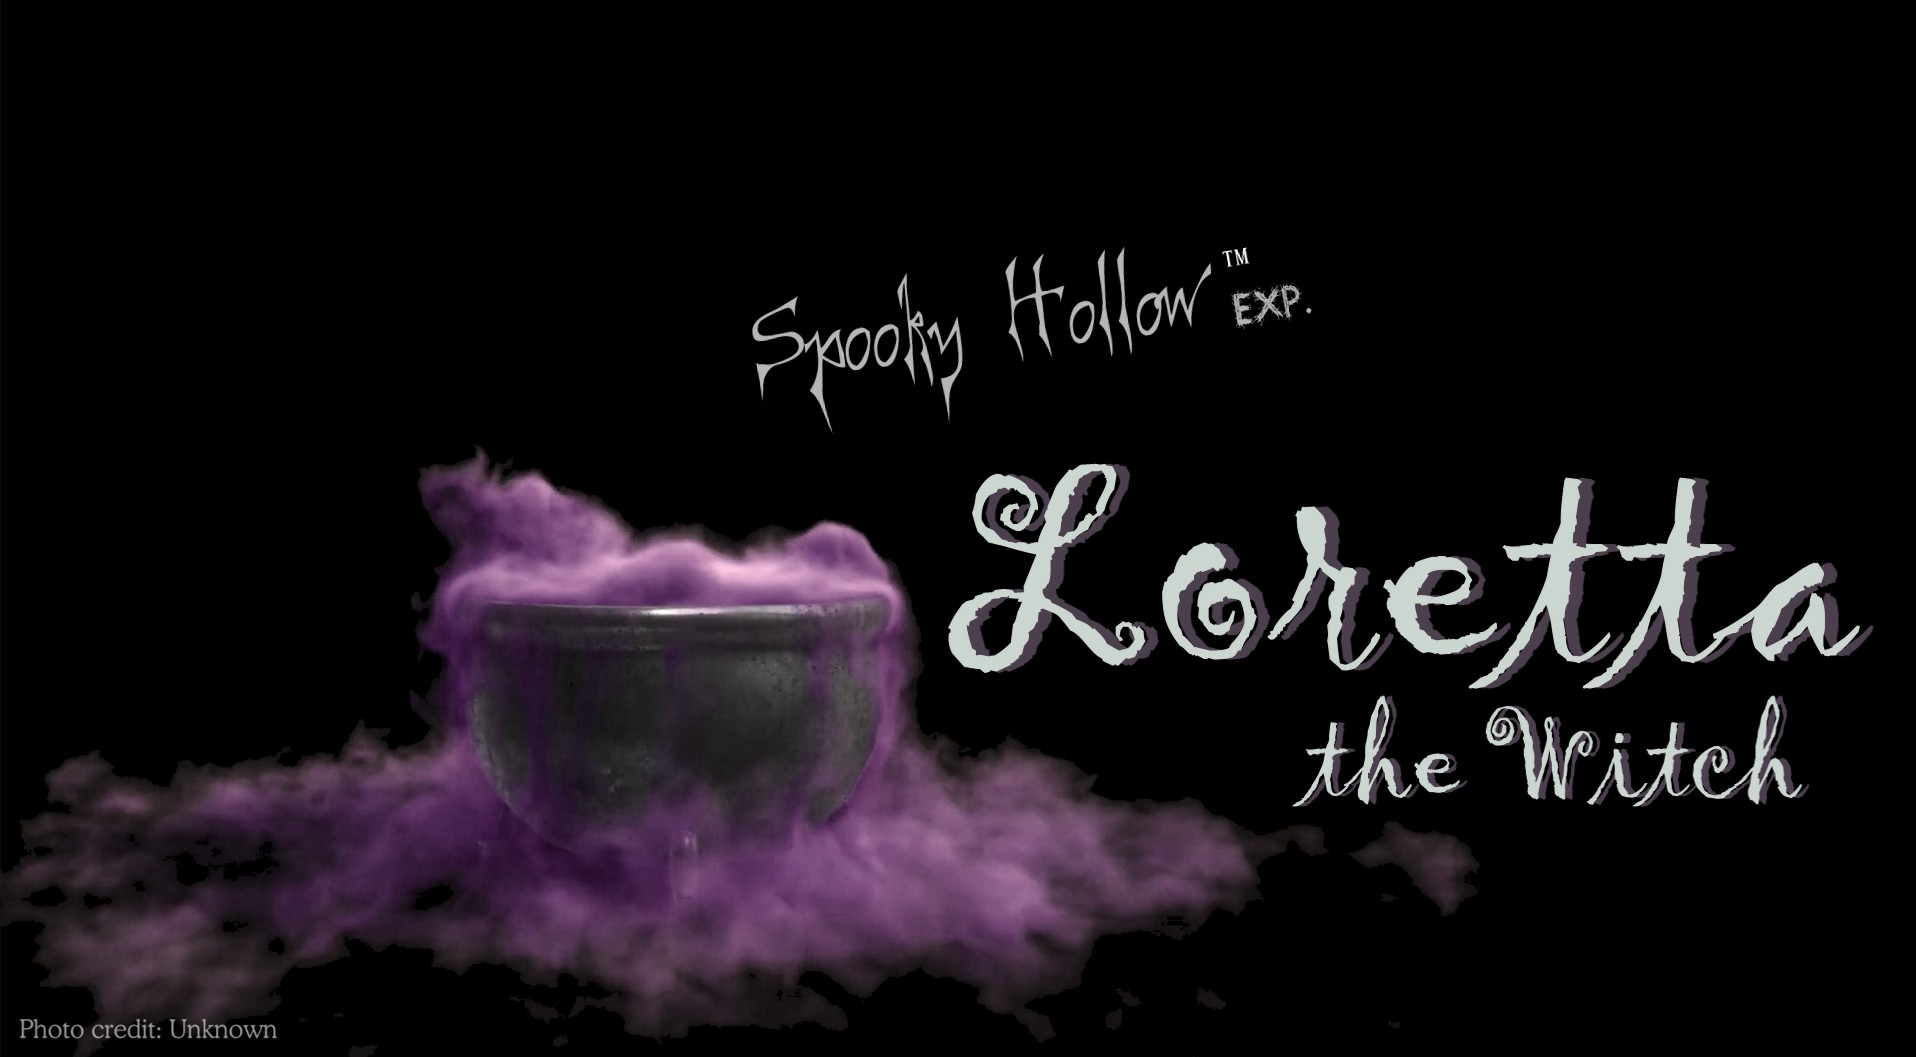 Spooky Hollow Experience Copyright Loretta